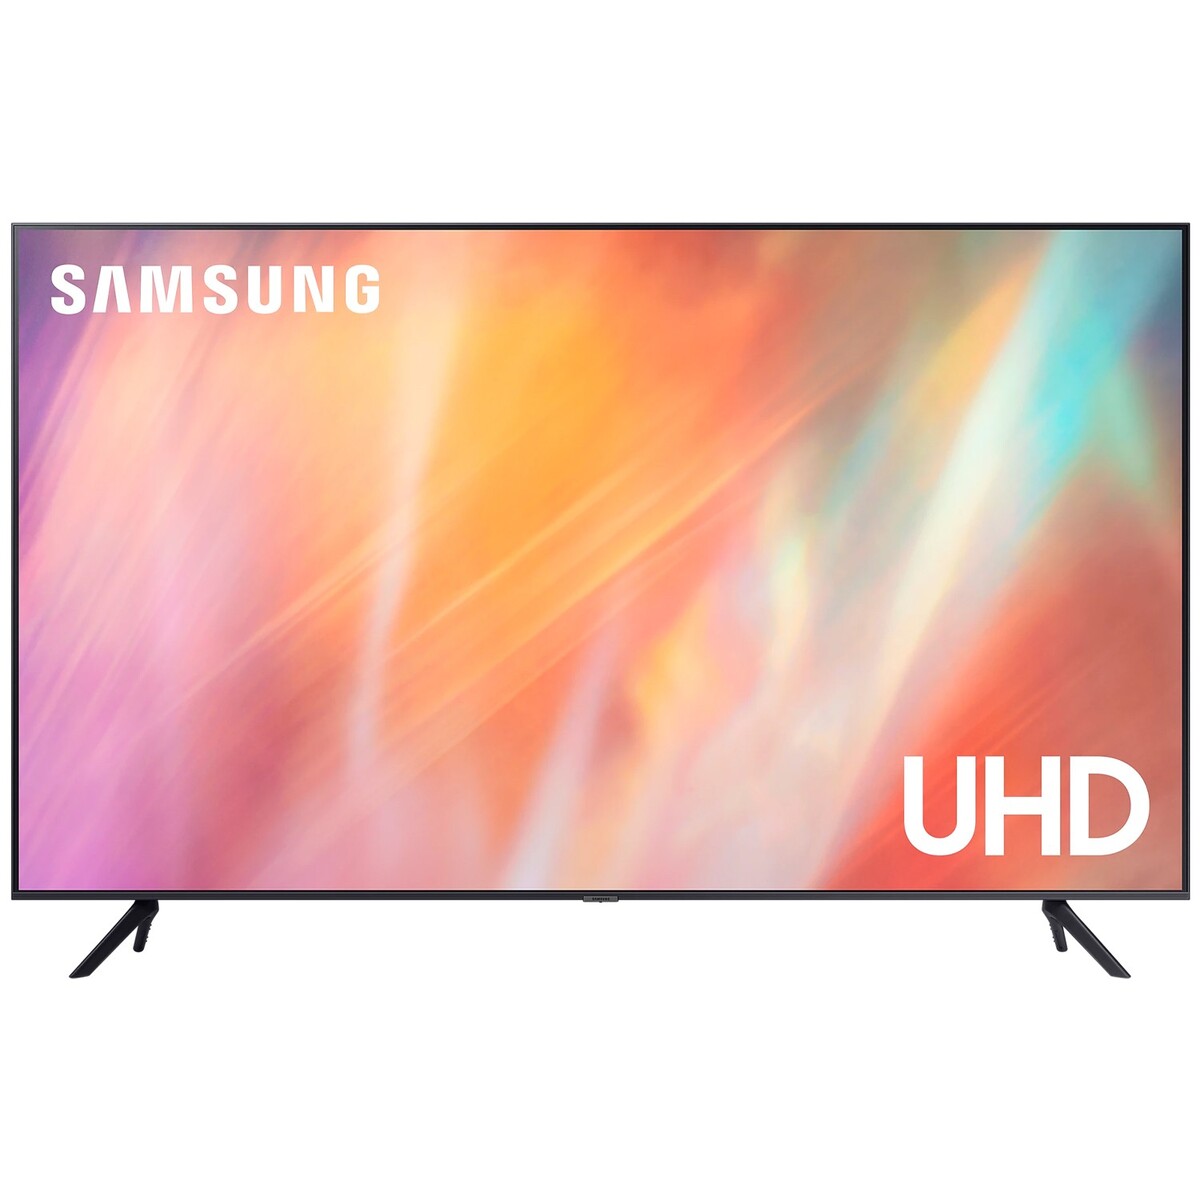 Samsung 4K UHD LED Smart TV UA43AU7700 43"